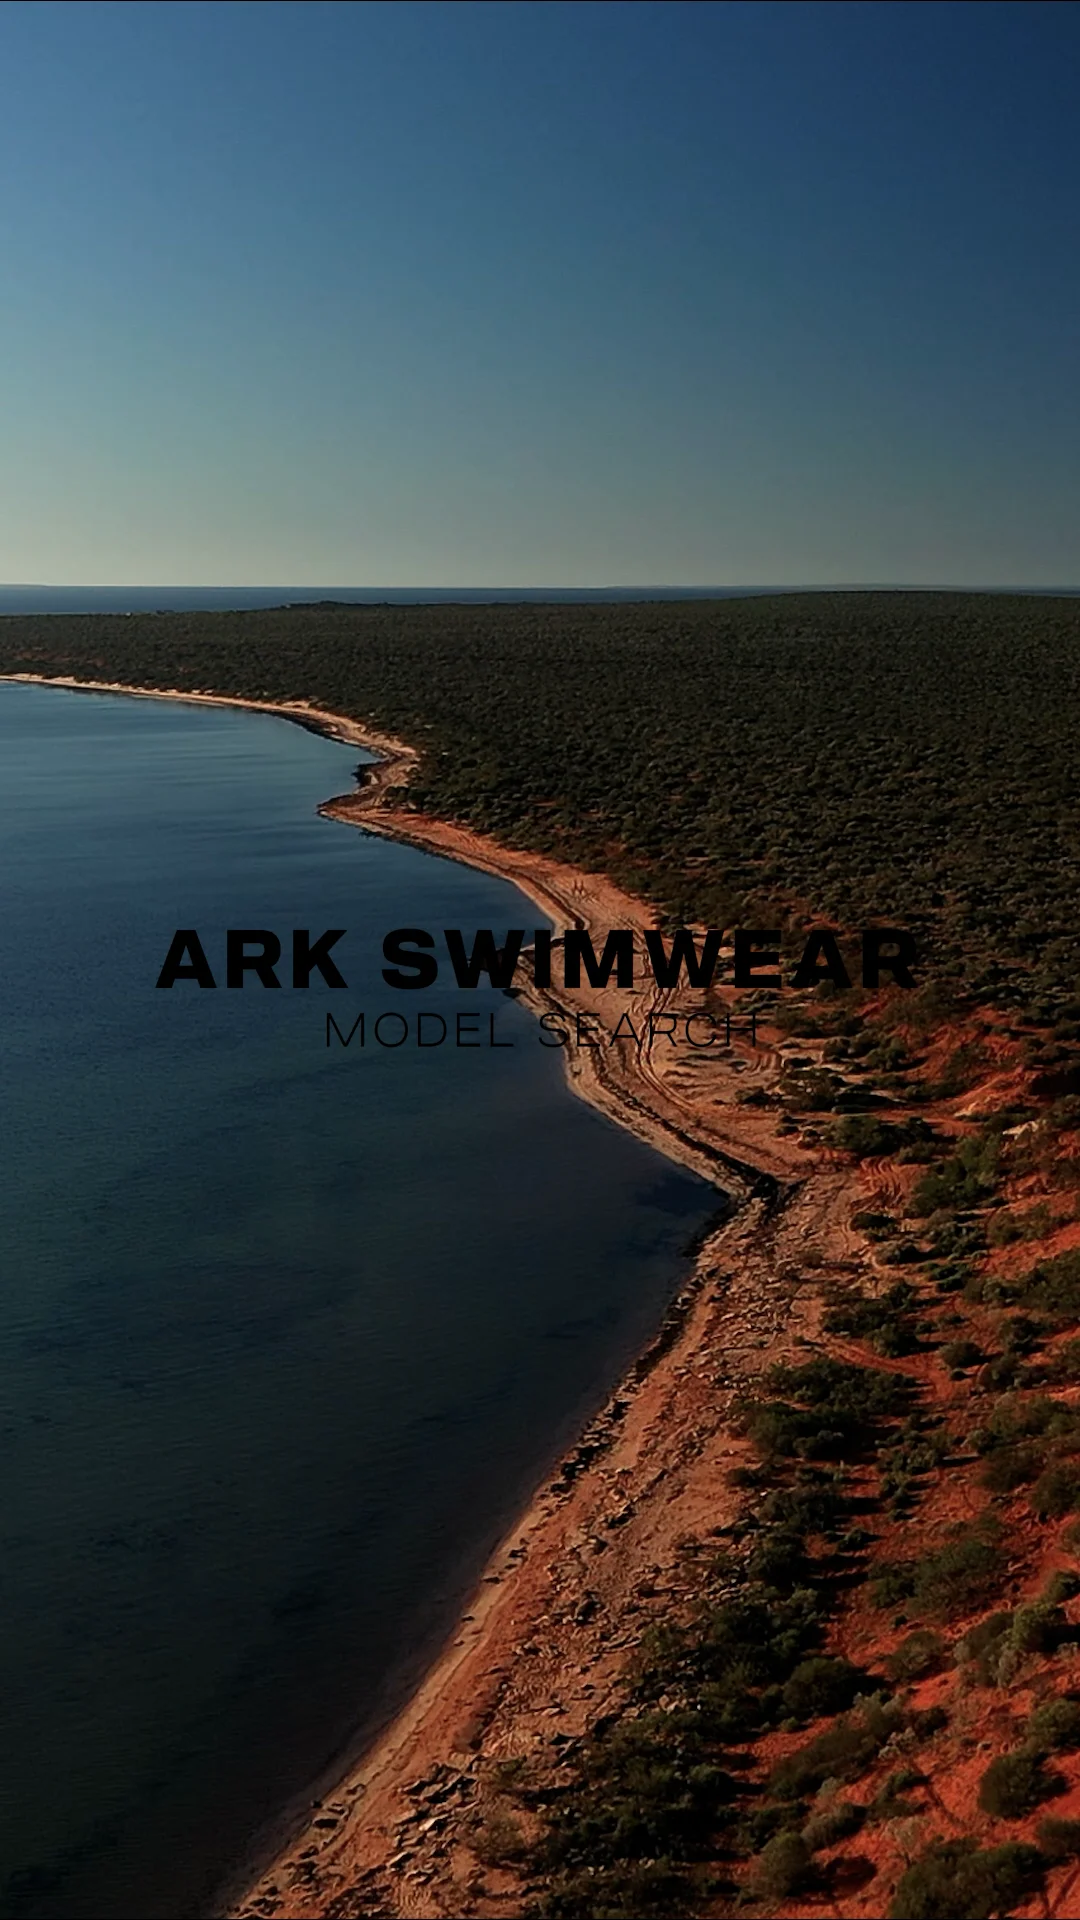 ARK SWIMWEAR - TURK & CAICOS TRIP on Vimeo